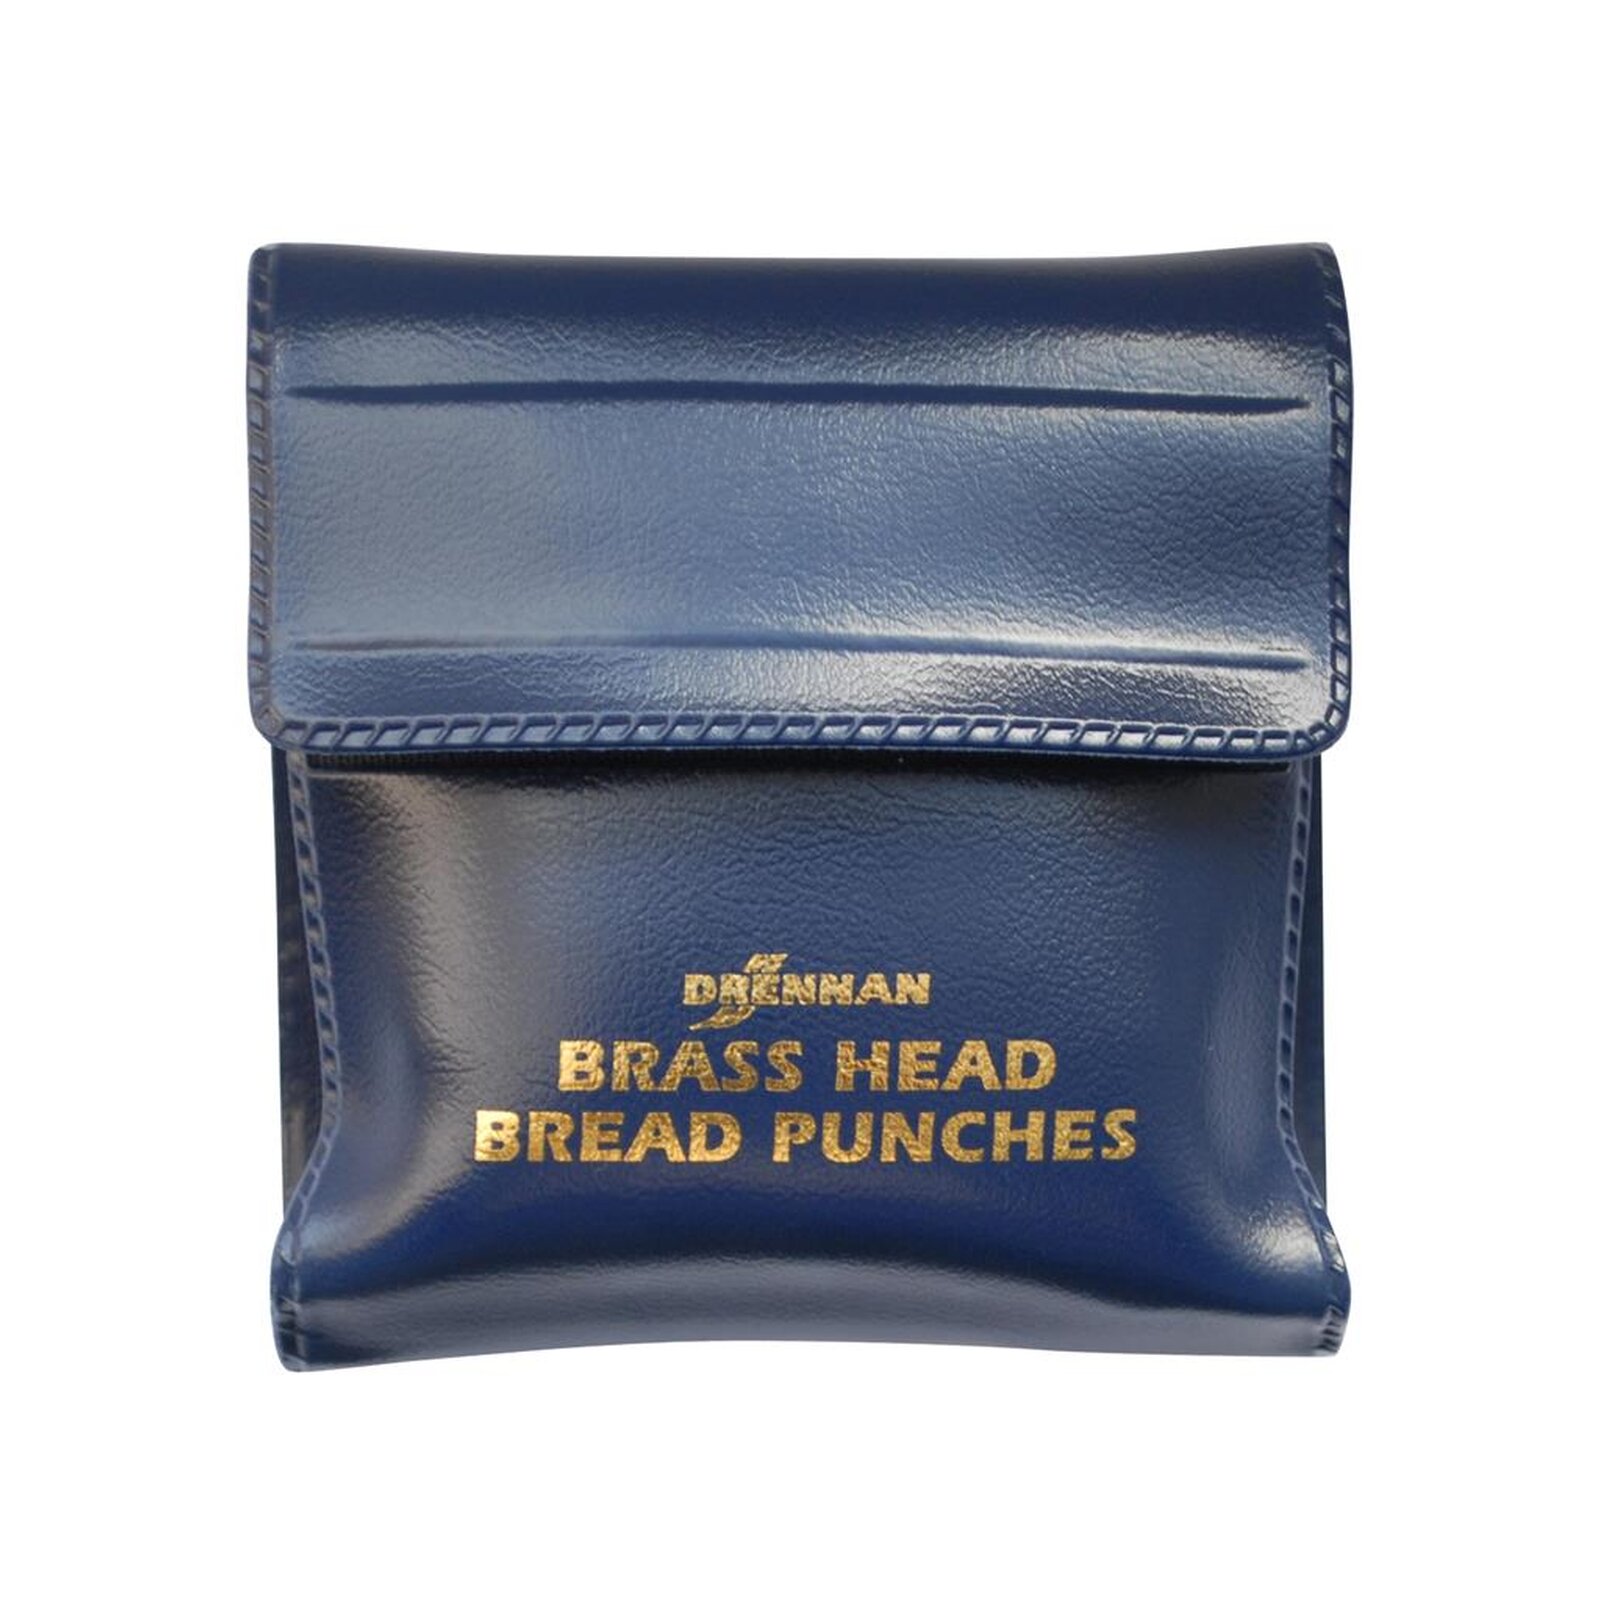 Drennan Brass Head Bread Punches Large